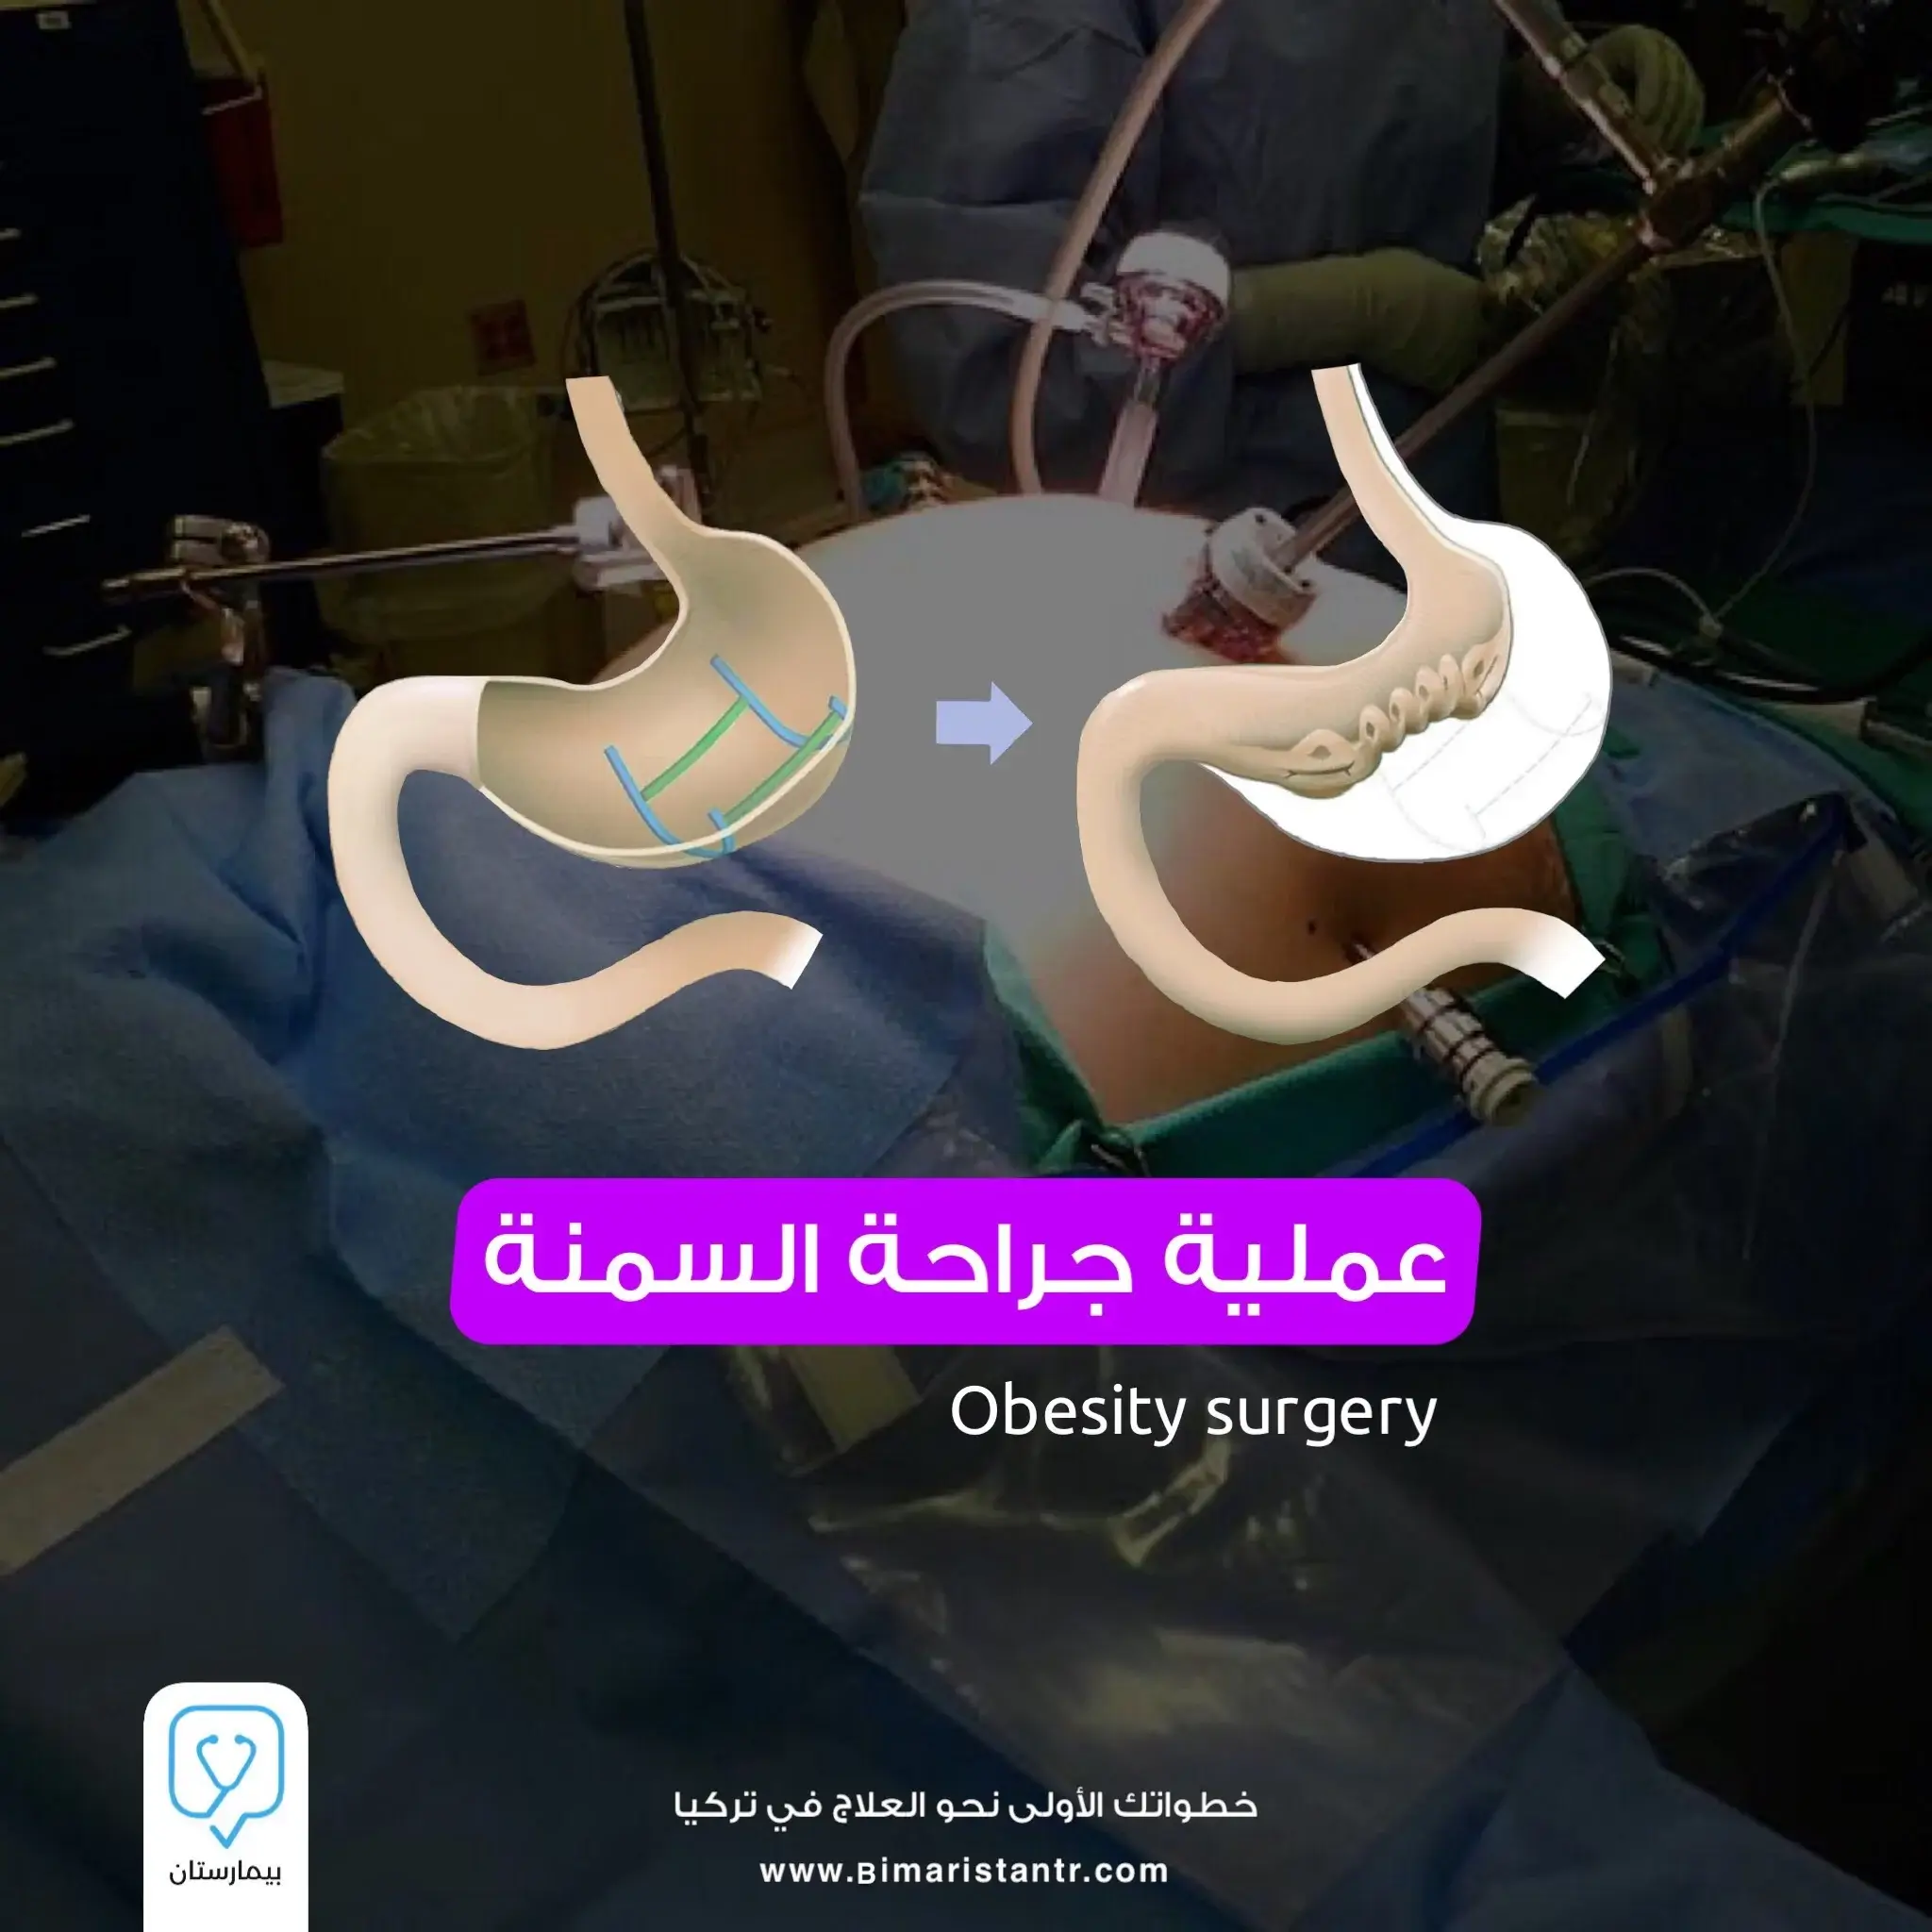 Obesity surgeries